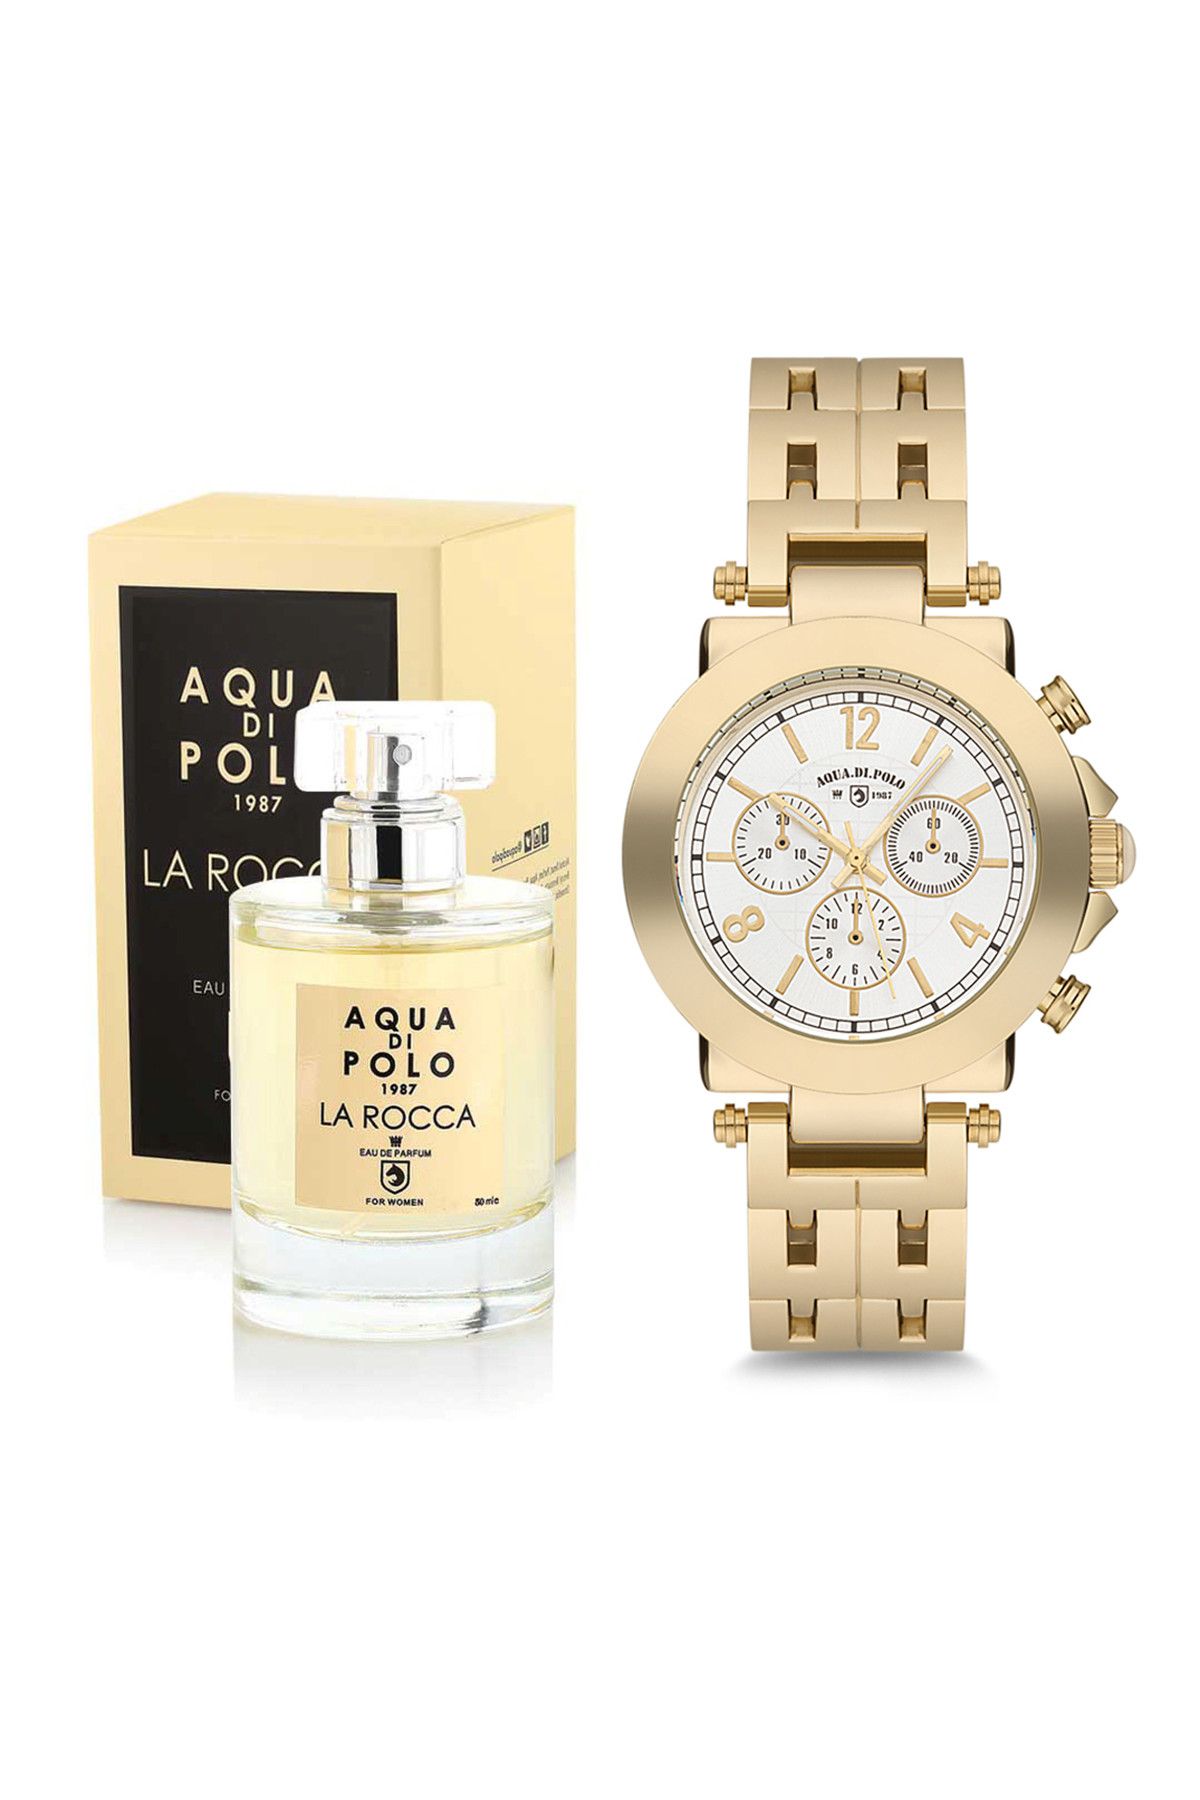 Aqua Di Polo 1987 Kadın Parfüm ve Kol Saati PKAPL15B96001